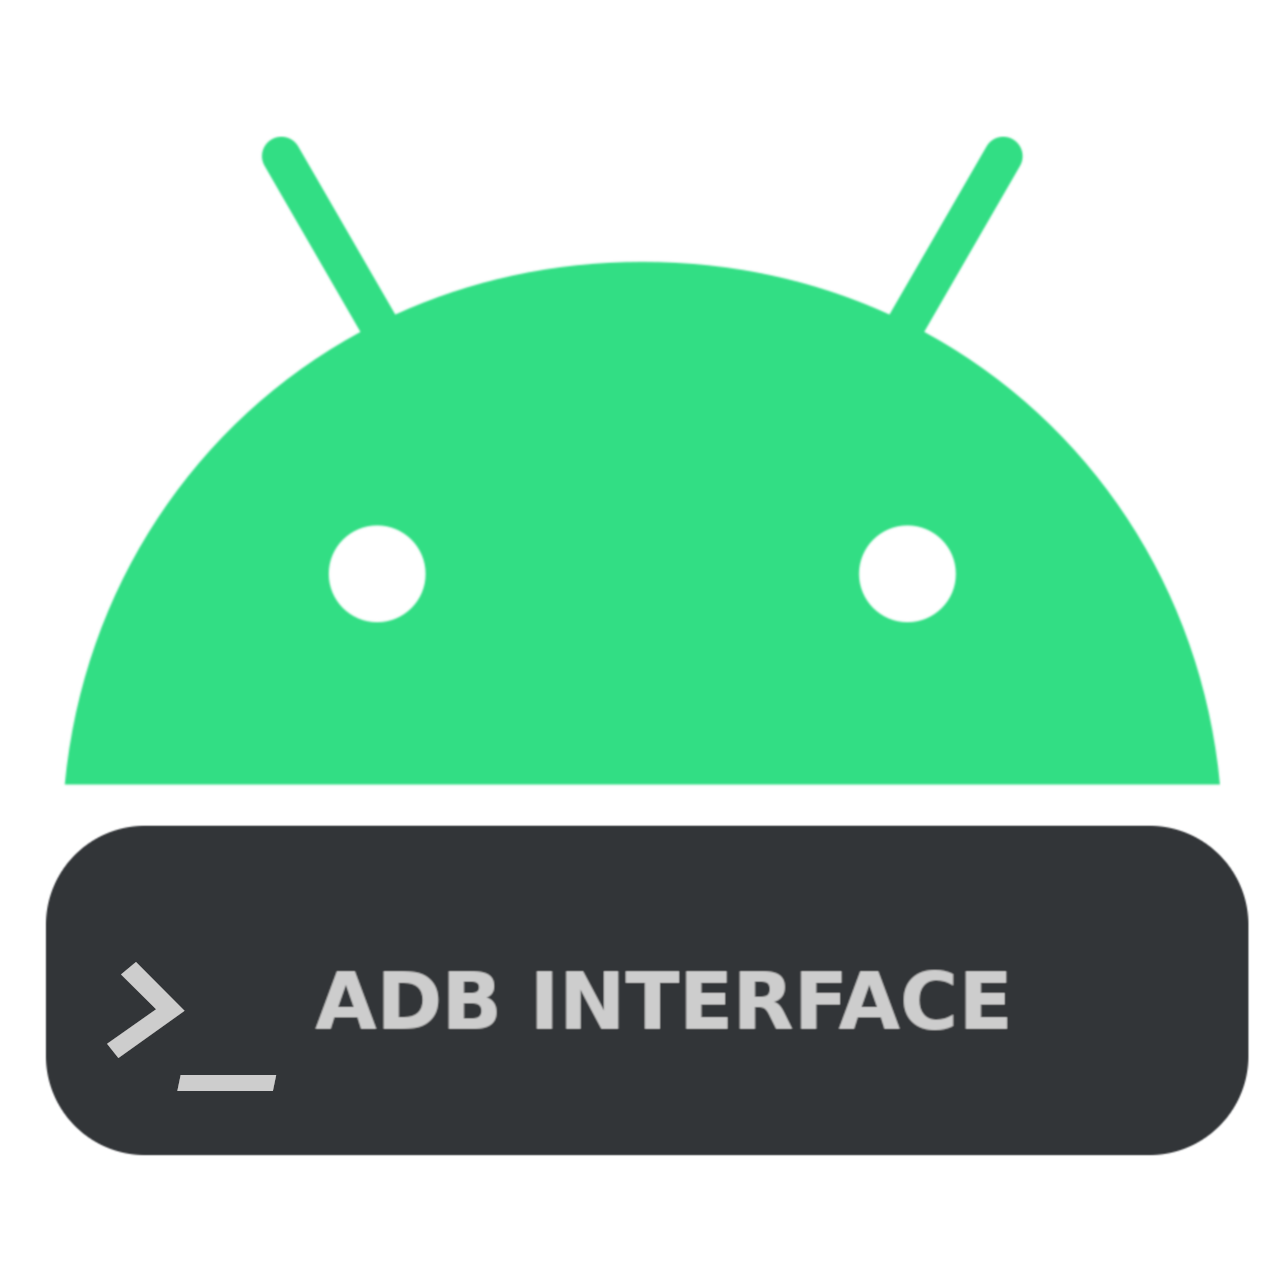 android studio error while installing apk